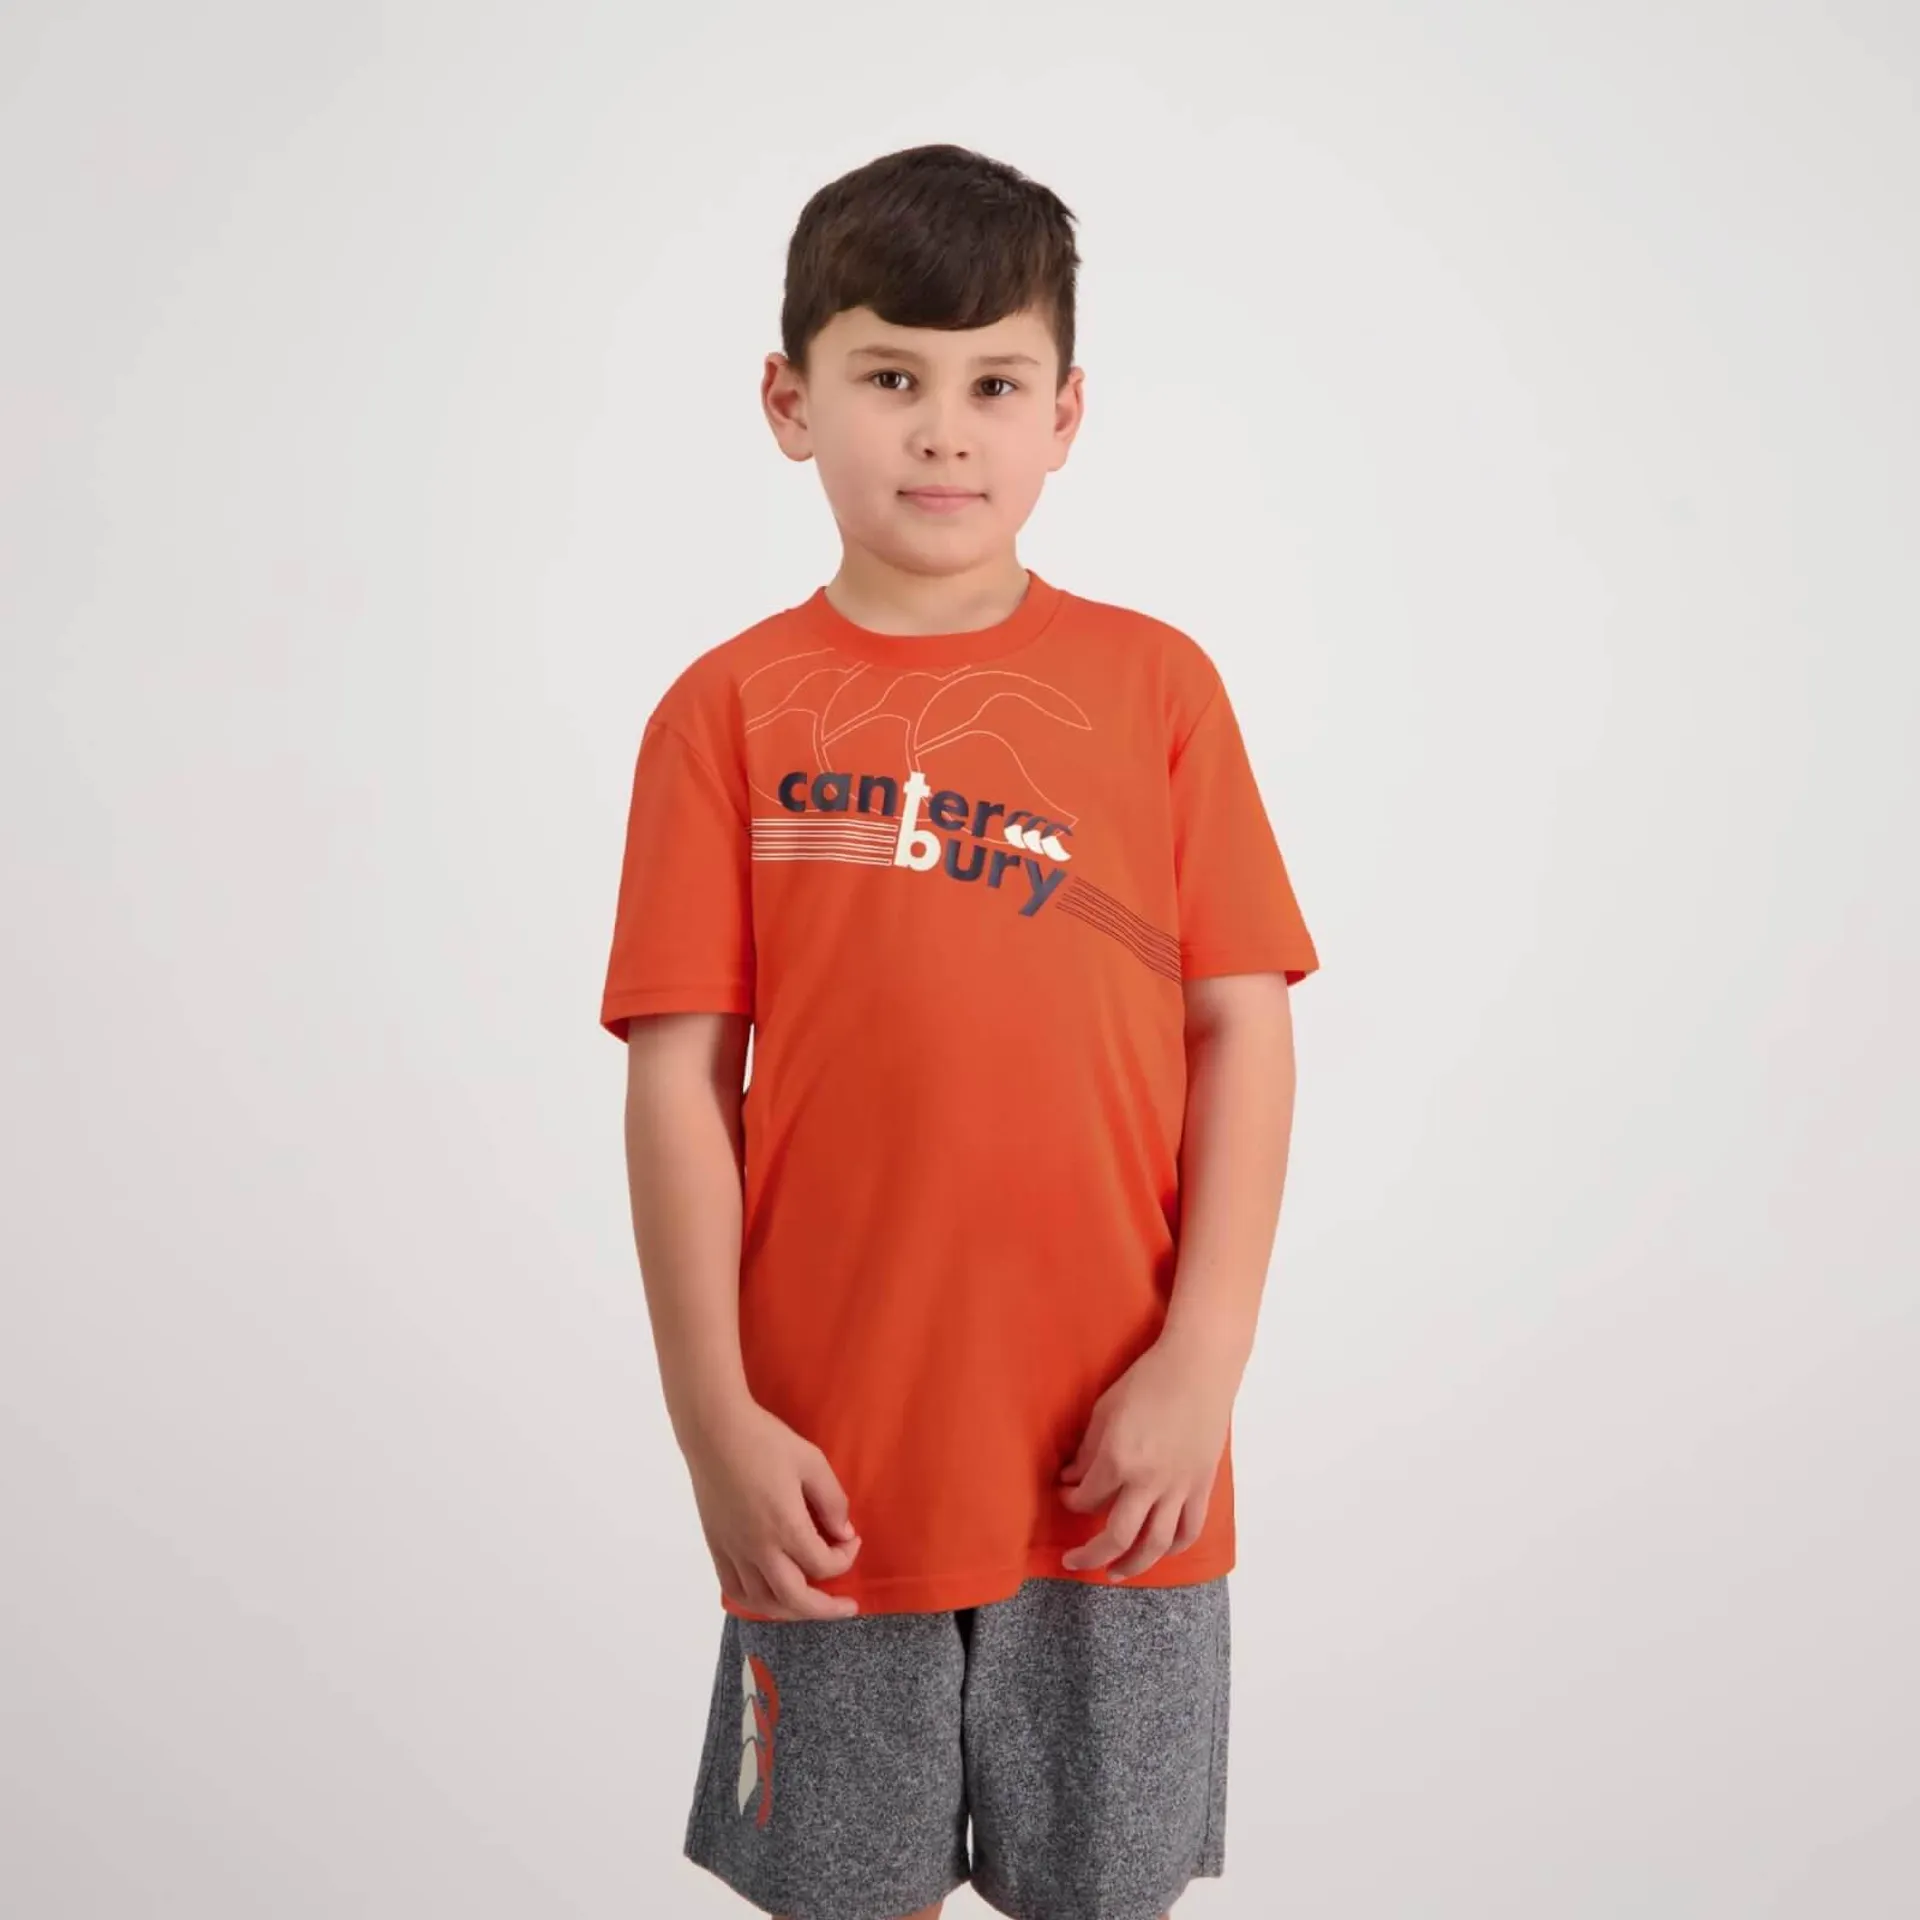 Kids Lineout T-Shirt Tigerlily